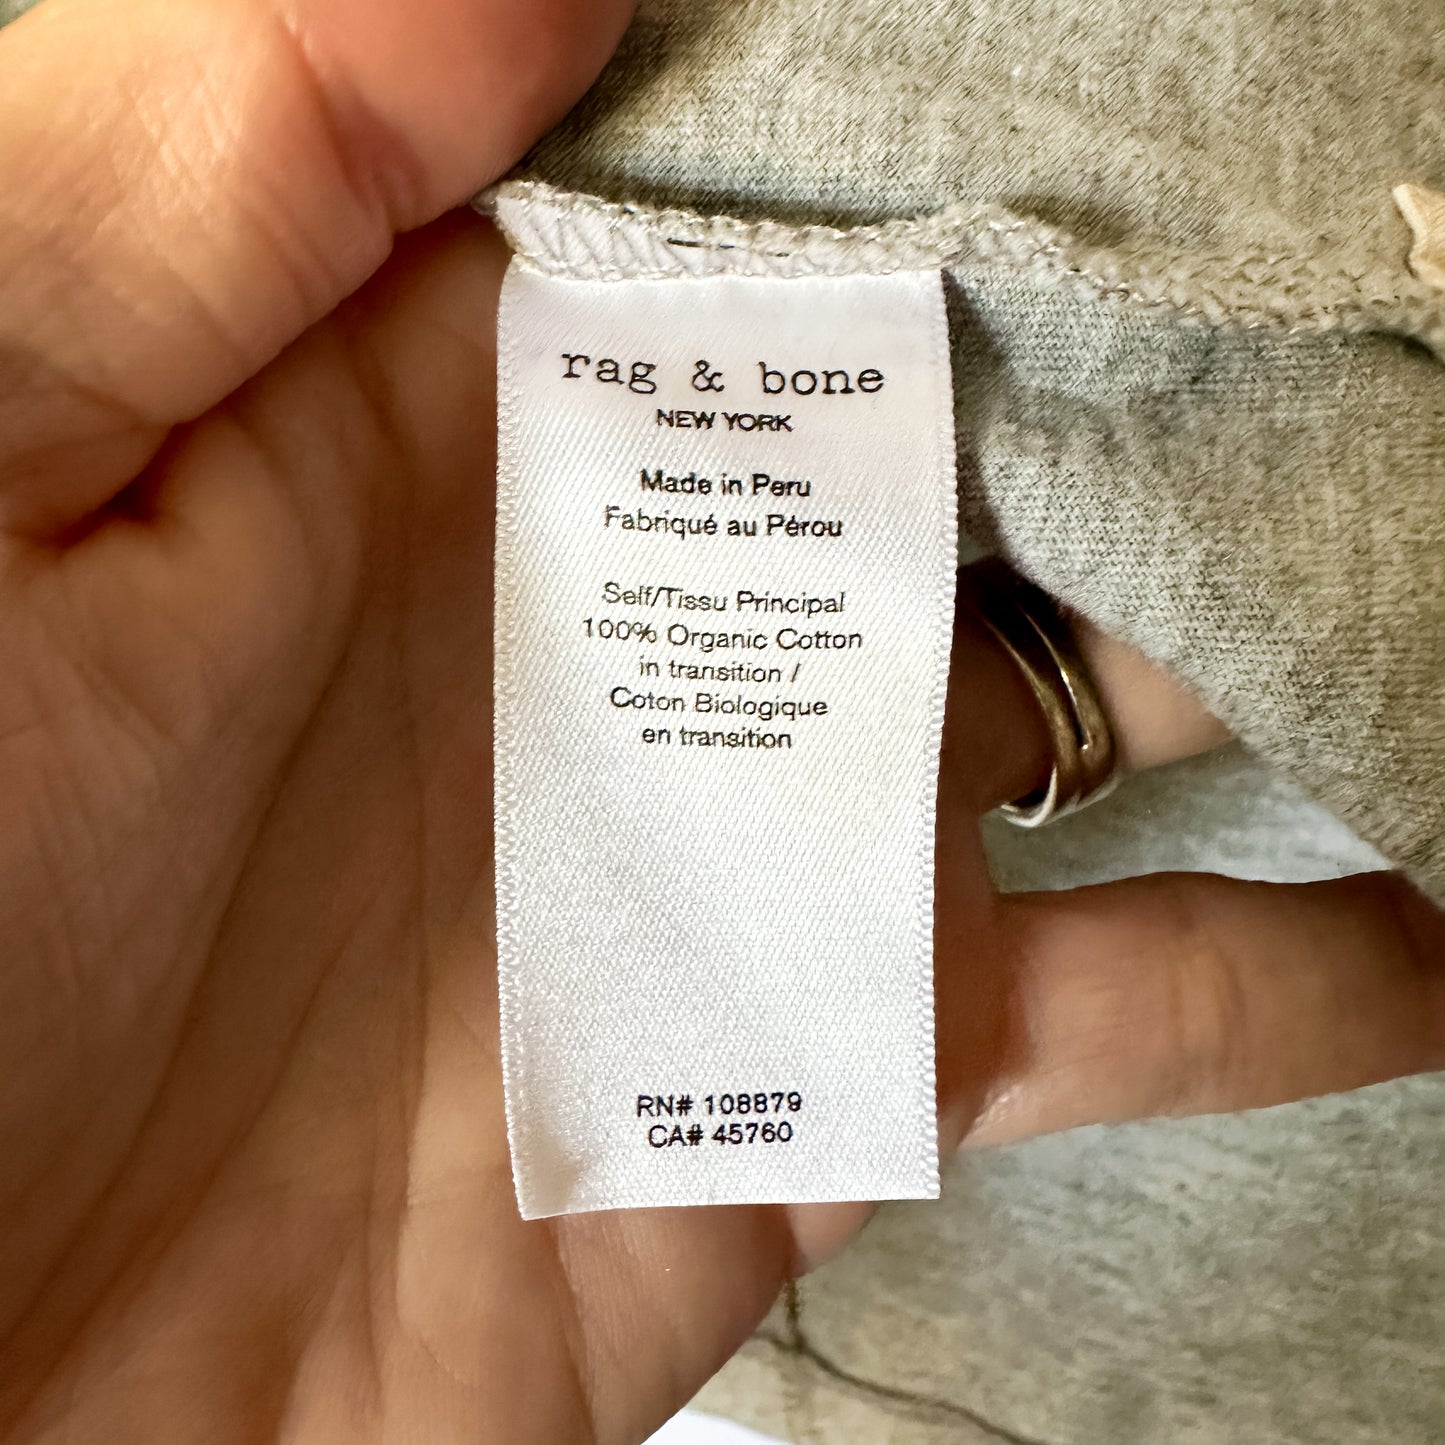 Grey Jersey Knit Crew Neck T-Shirt (fits S-L)